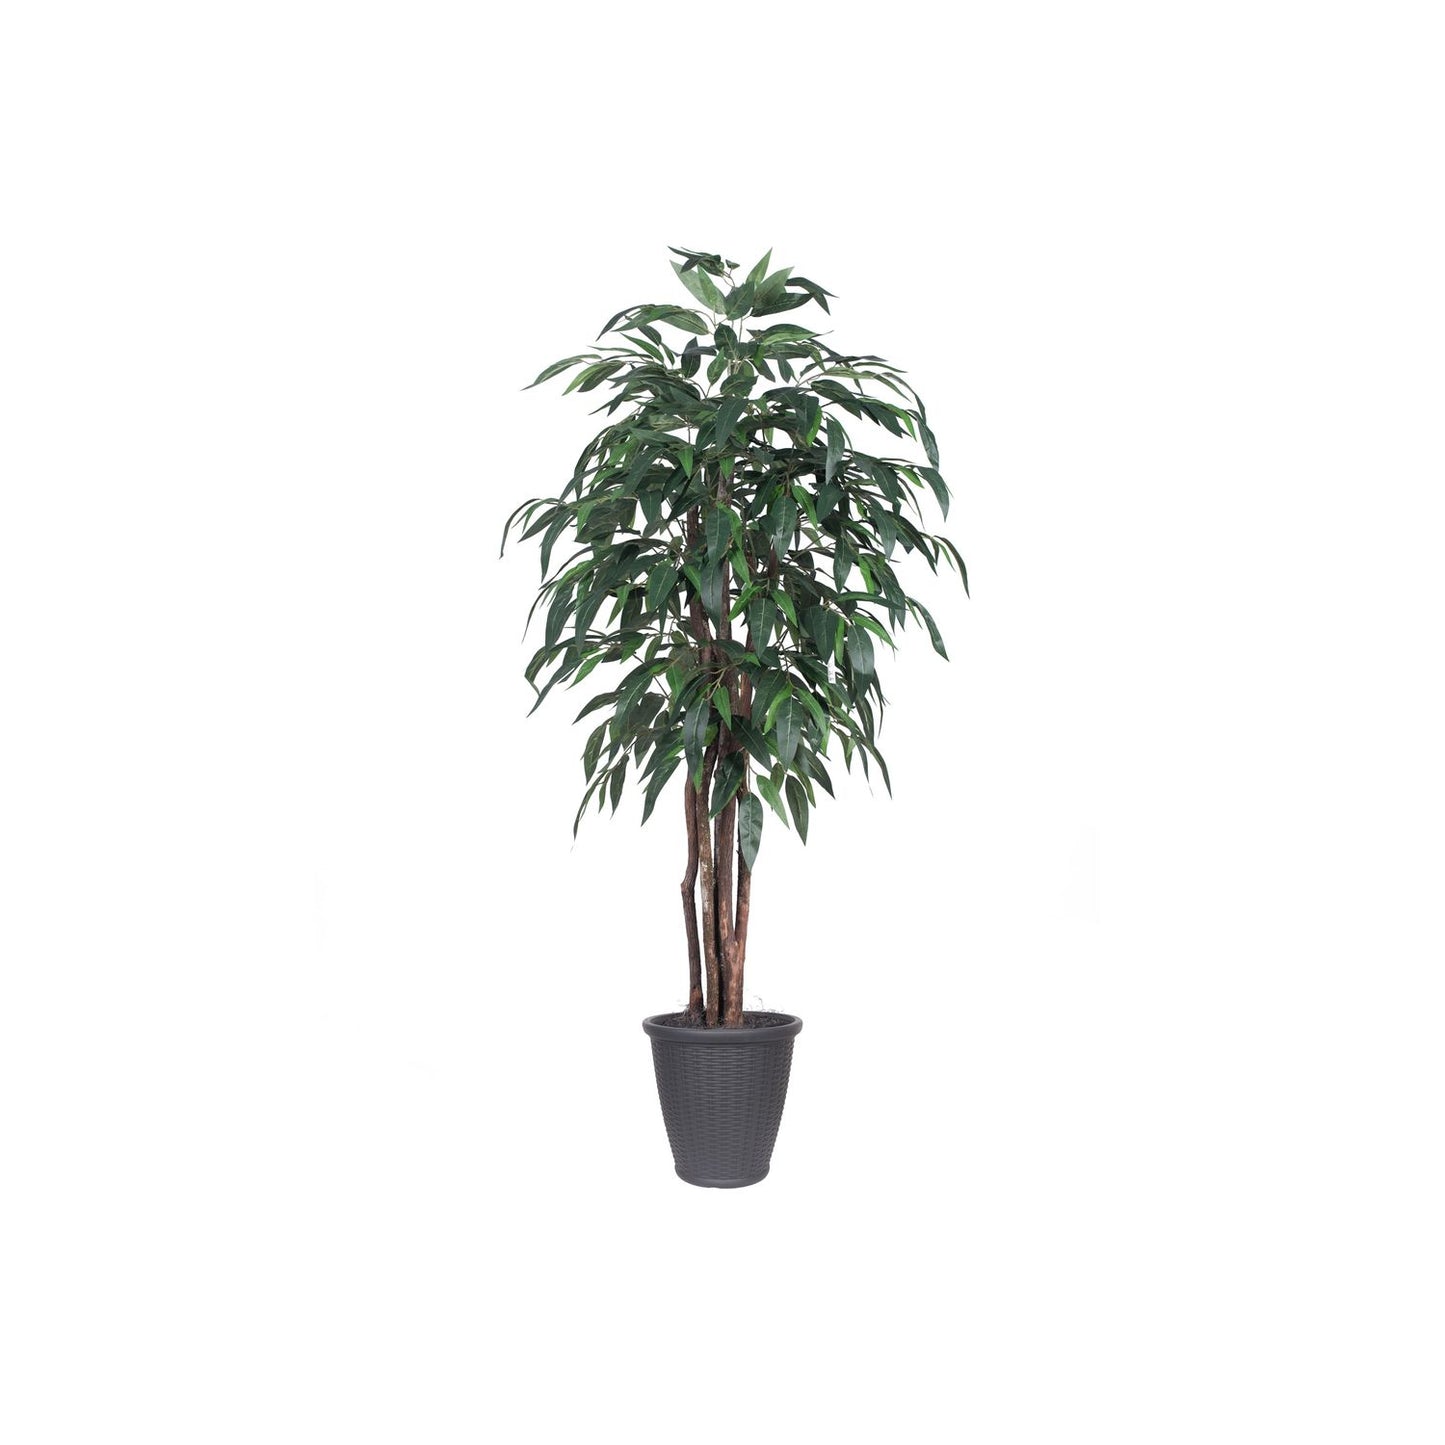 Vickerman 6' Artificial Mango Executive Tree, Gray Round Plastic Container, Silk